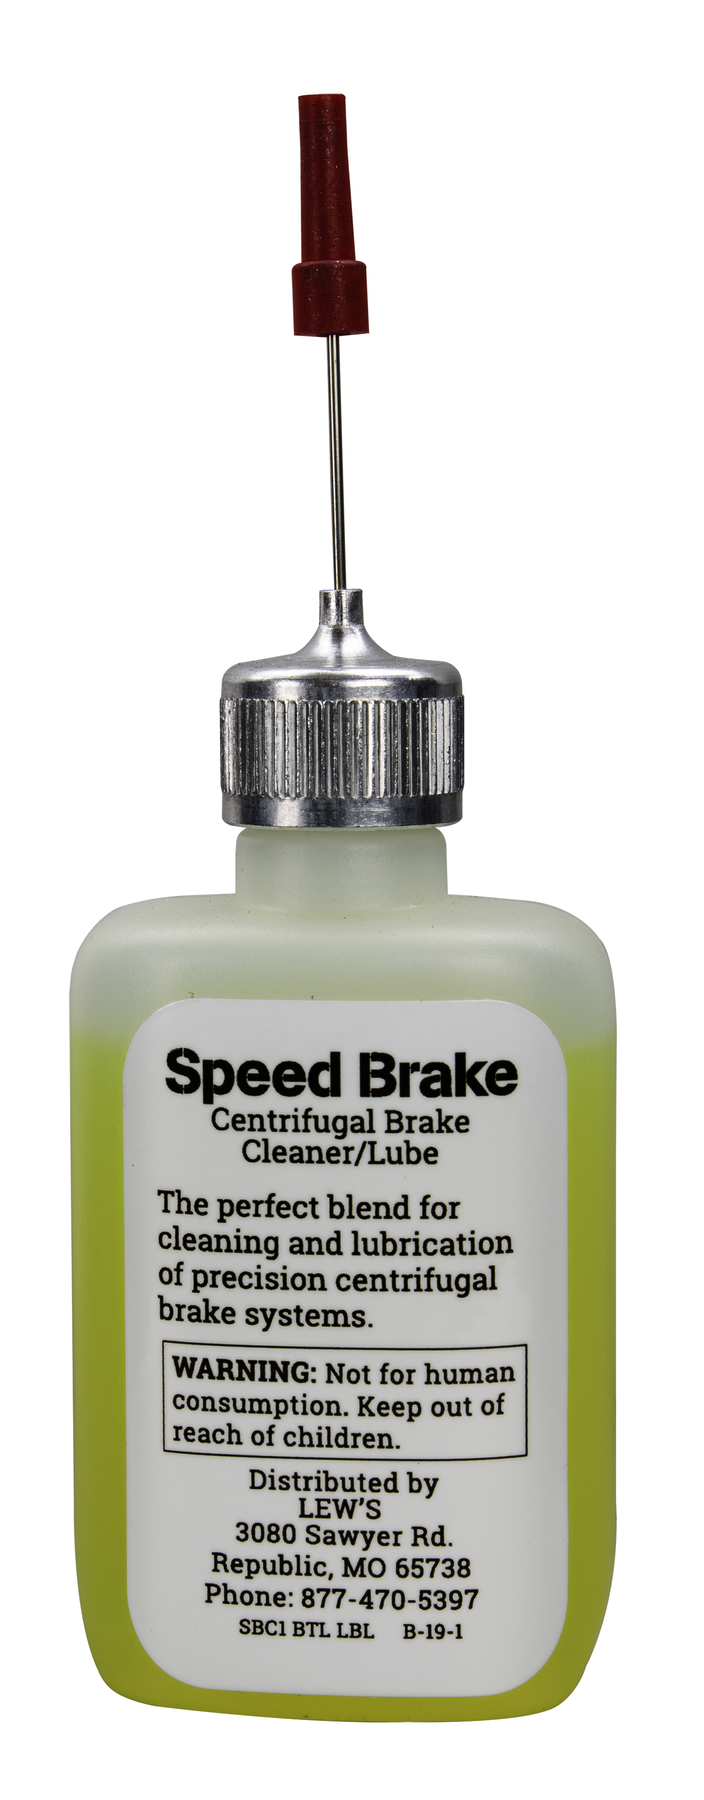 Speed Brake Centrifugal Brake Clean/Lube